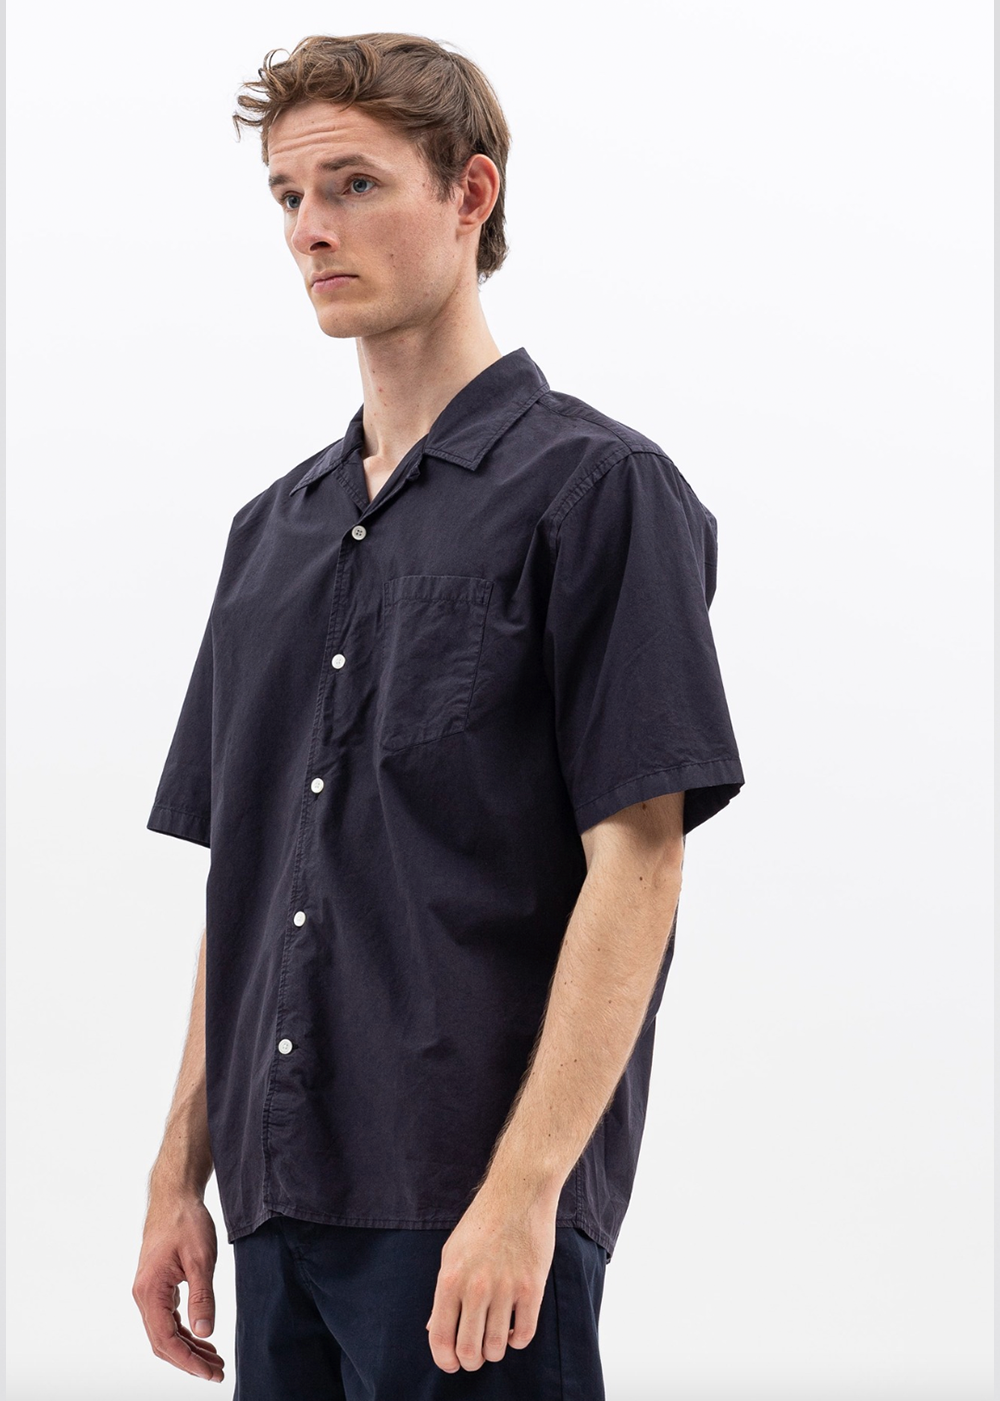 Carsten Cotton Tencel Shirt - Dark Navy - Norse Projects Canada - Danali - N40-0579